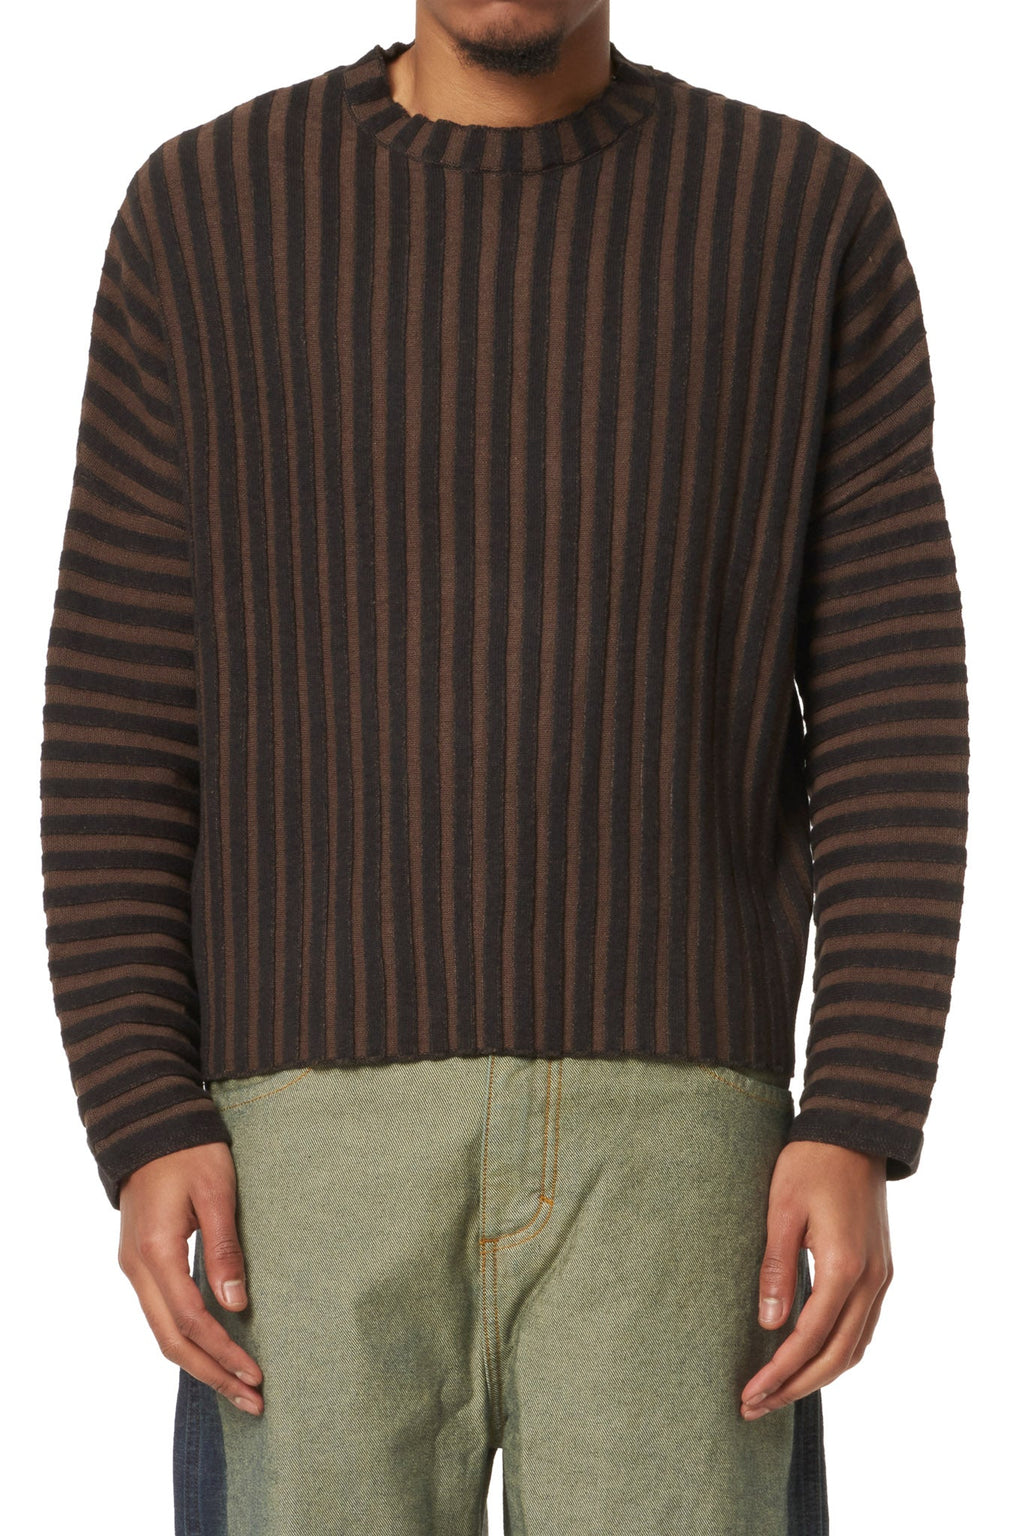 Eckhaus Latta Keyboard Sweater